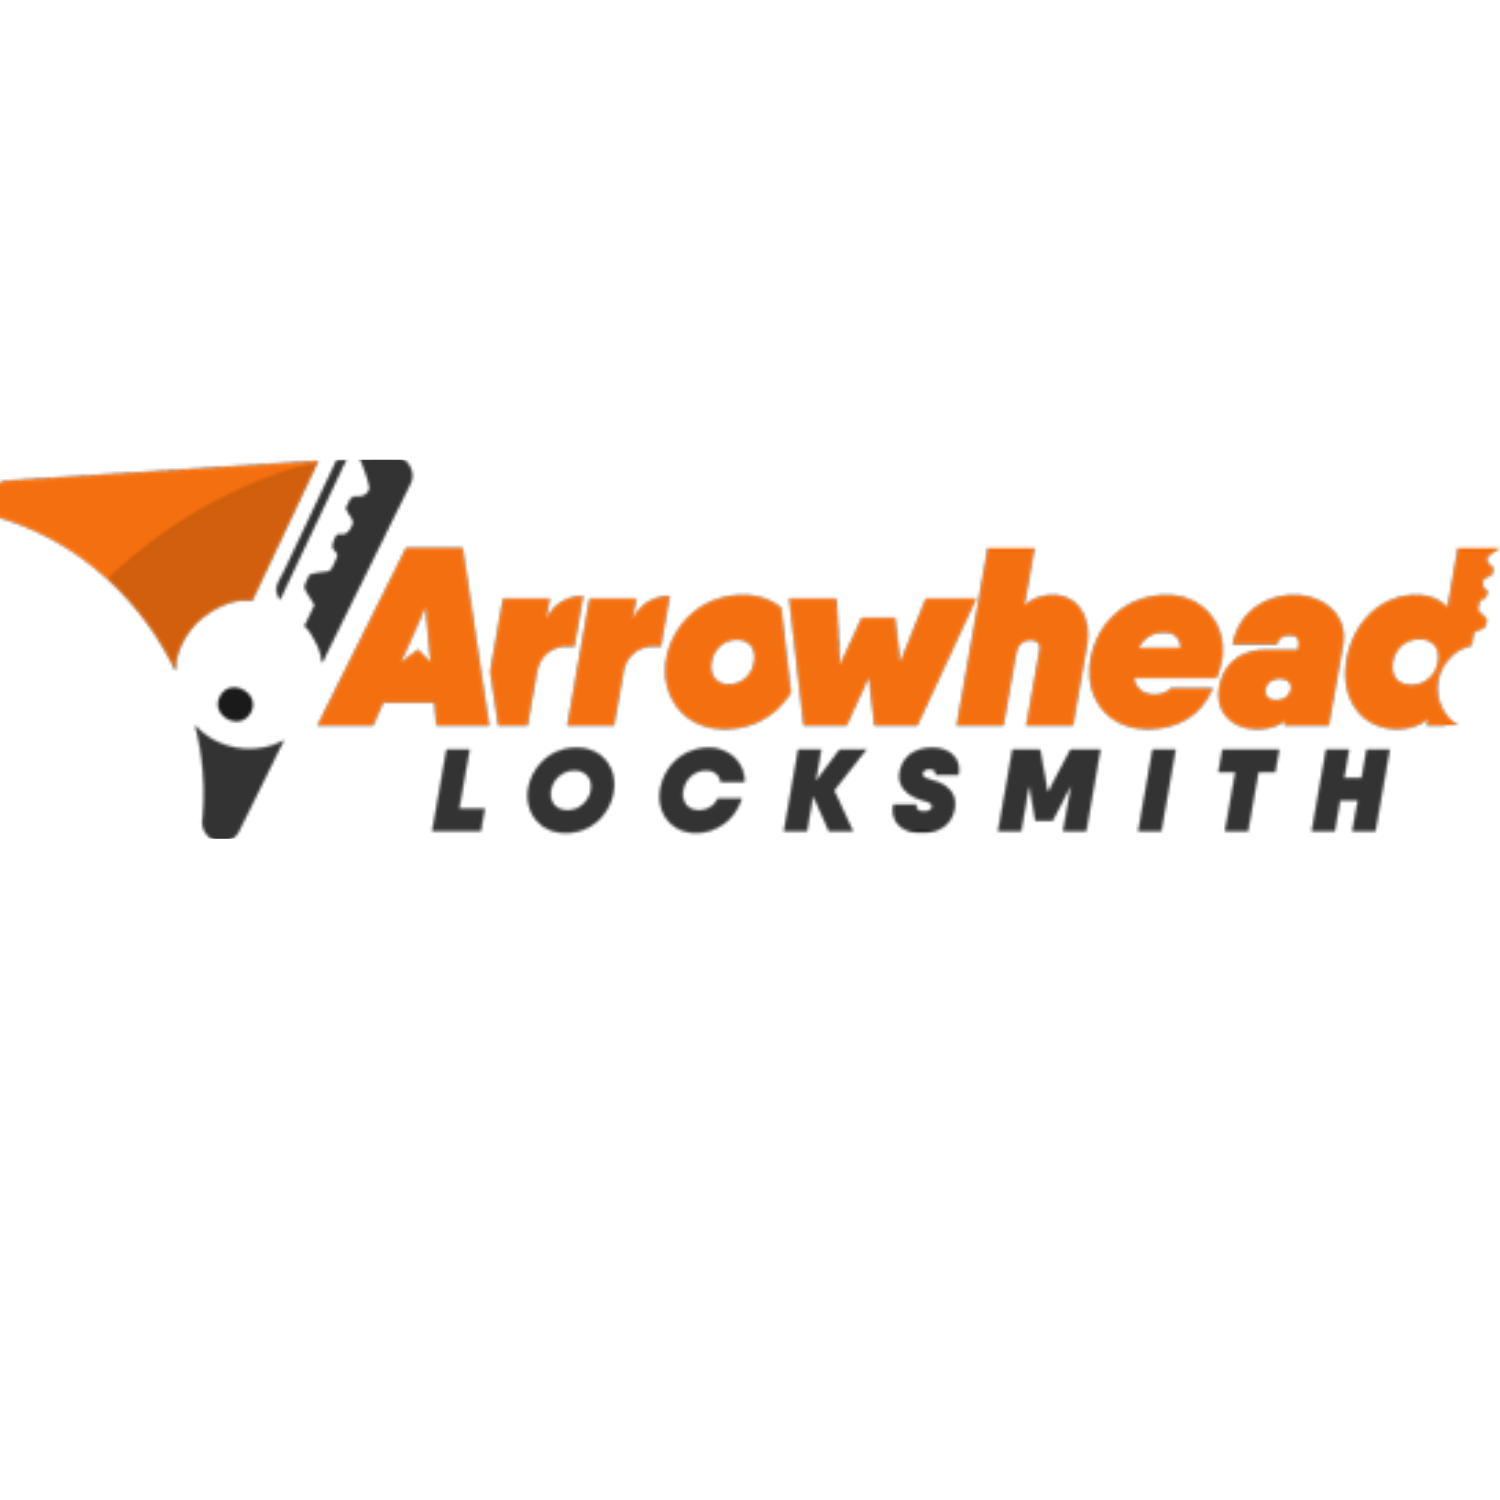 Arrowhead Locksmith